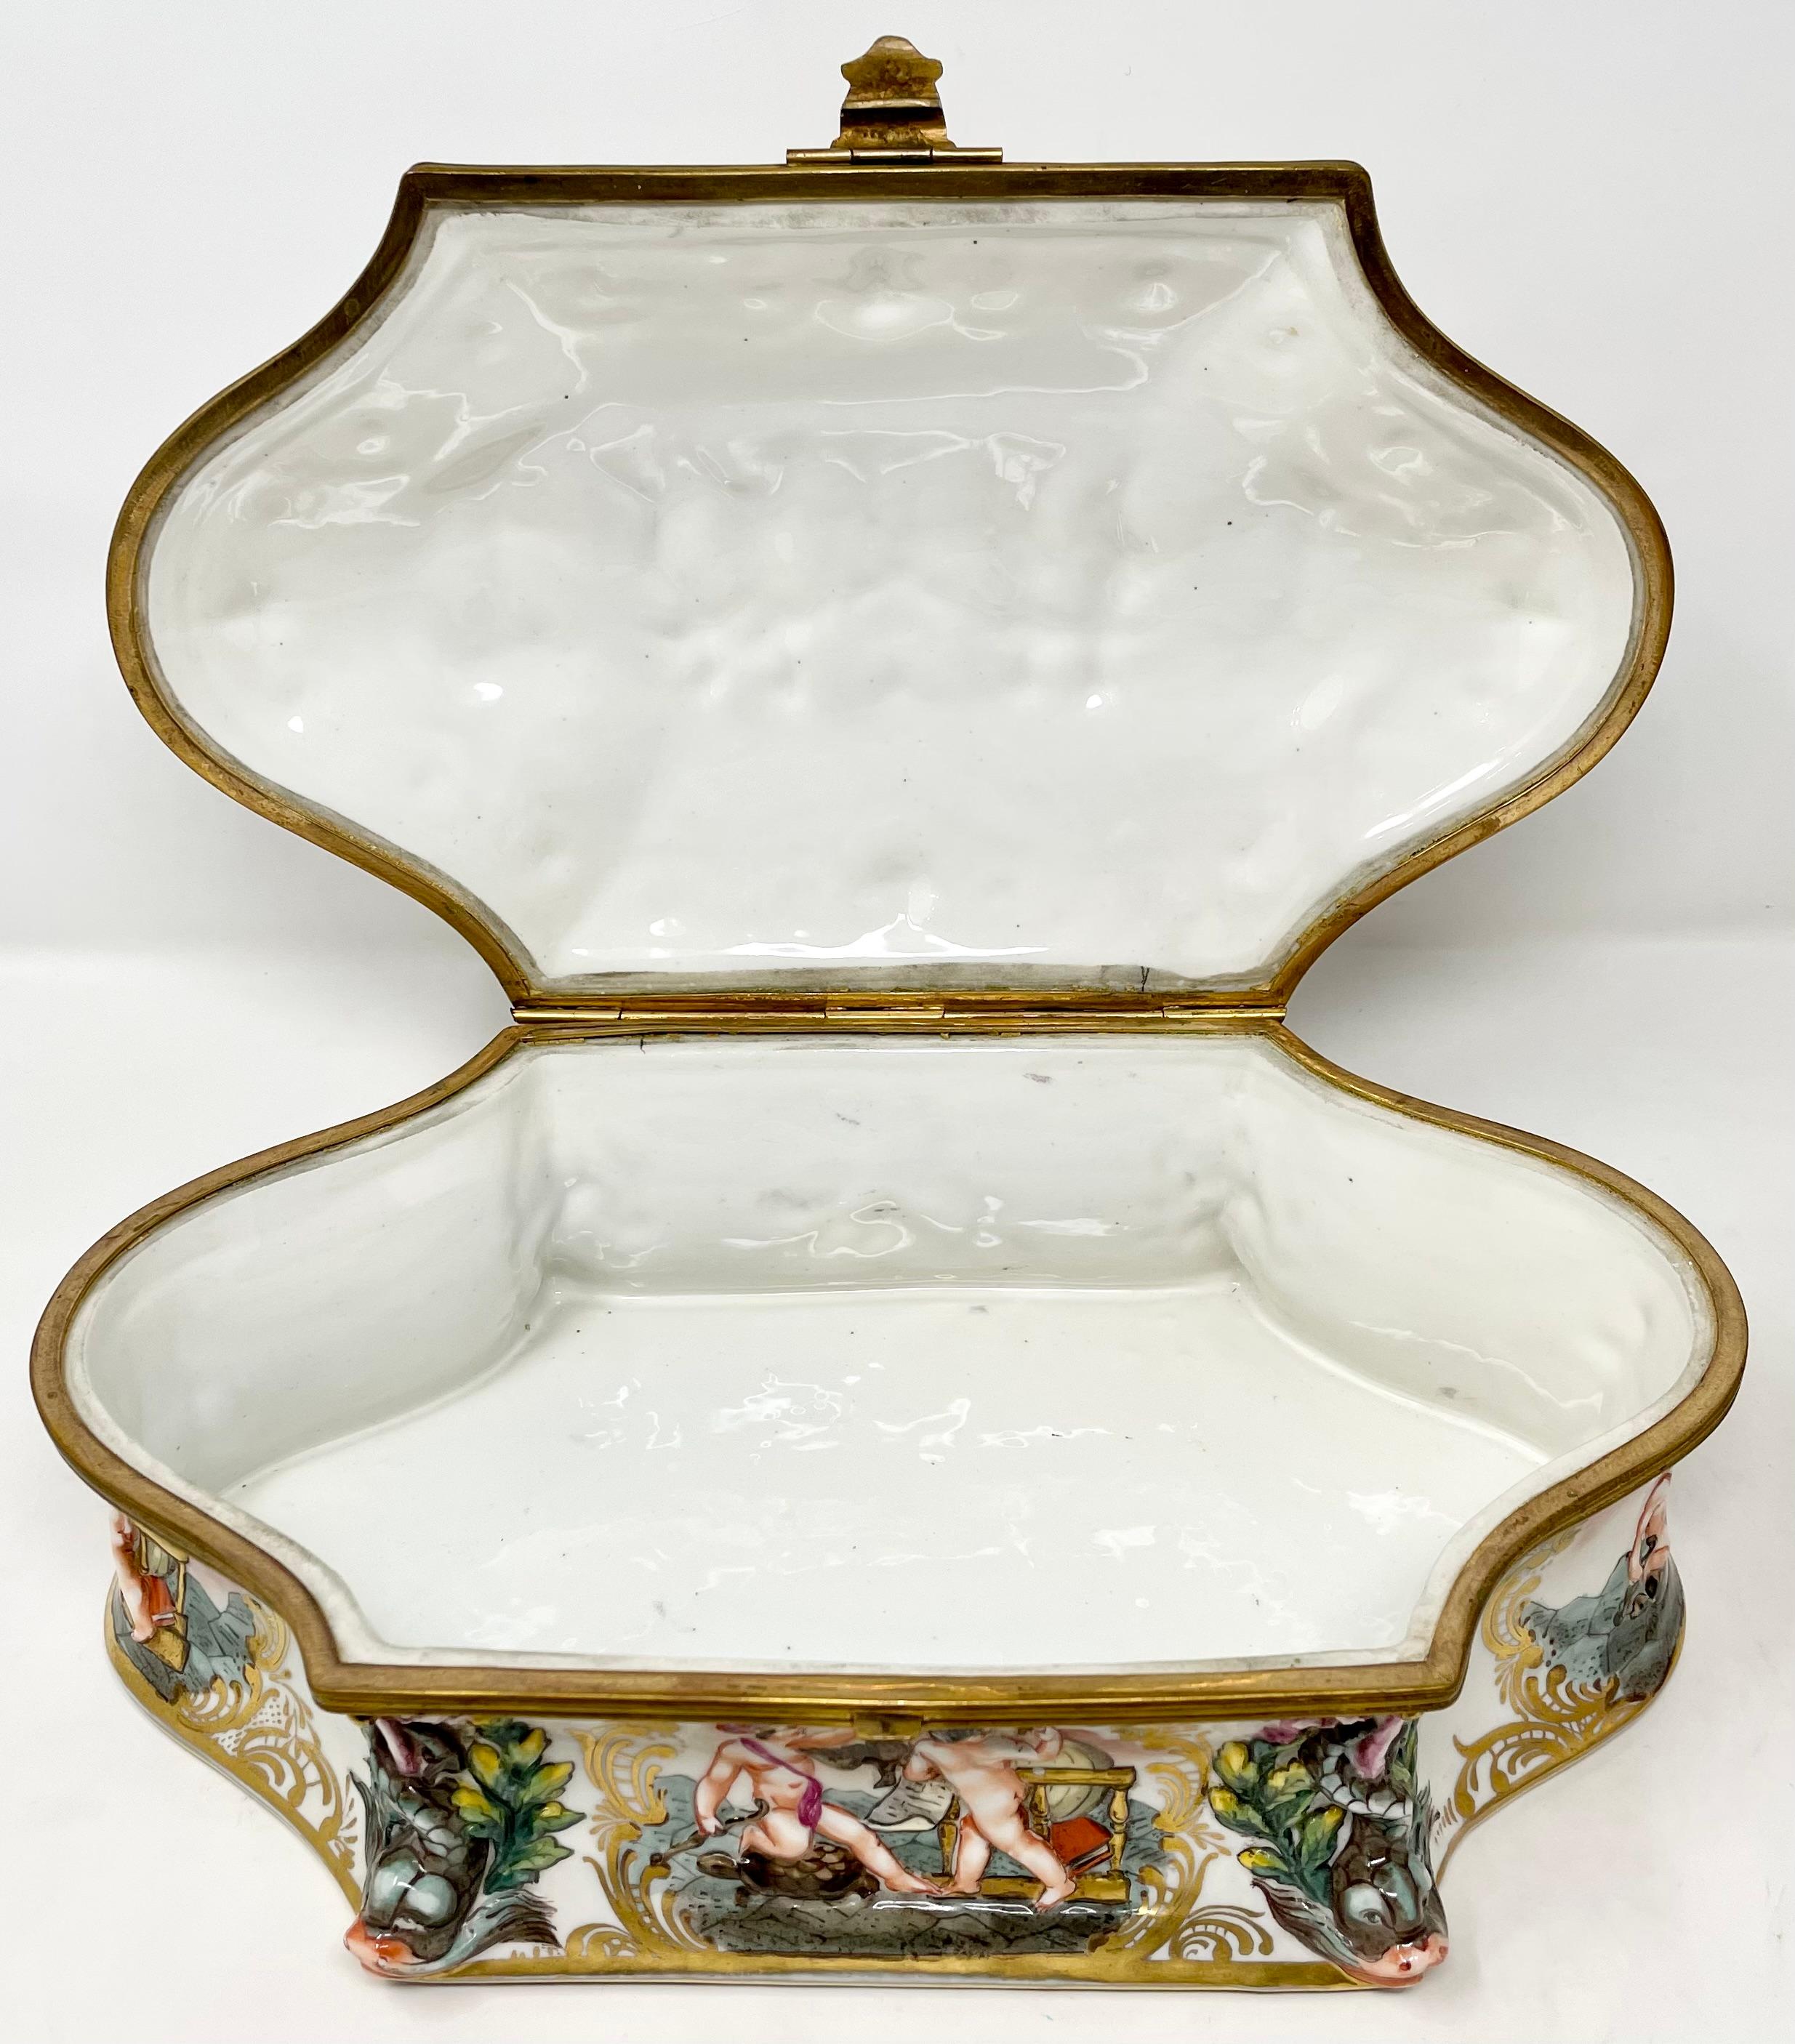 Large Antique Italian Capo di Monte Hand-Painted Porcelain Jewel Box circa 1900. For Sale 3